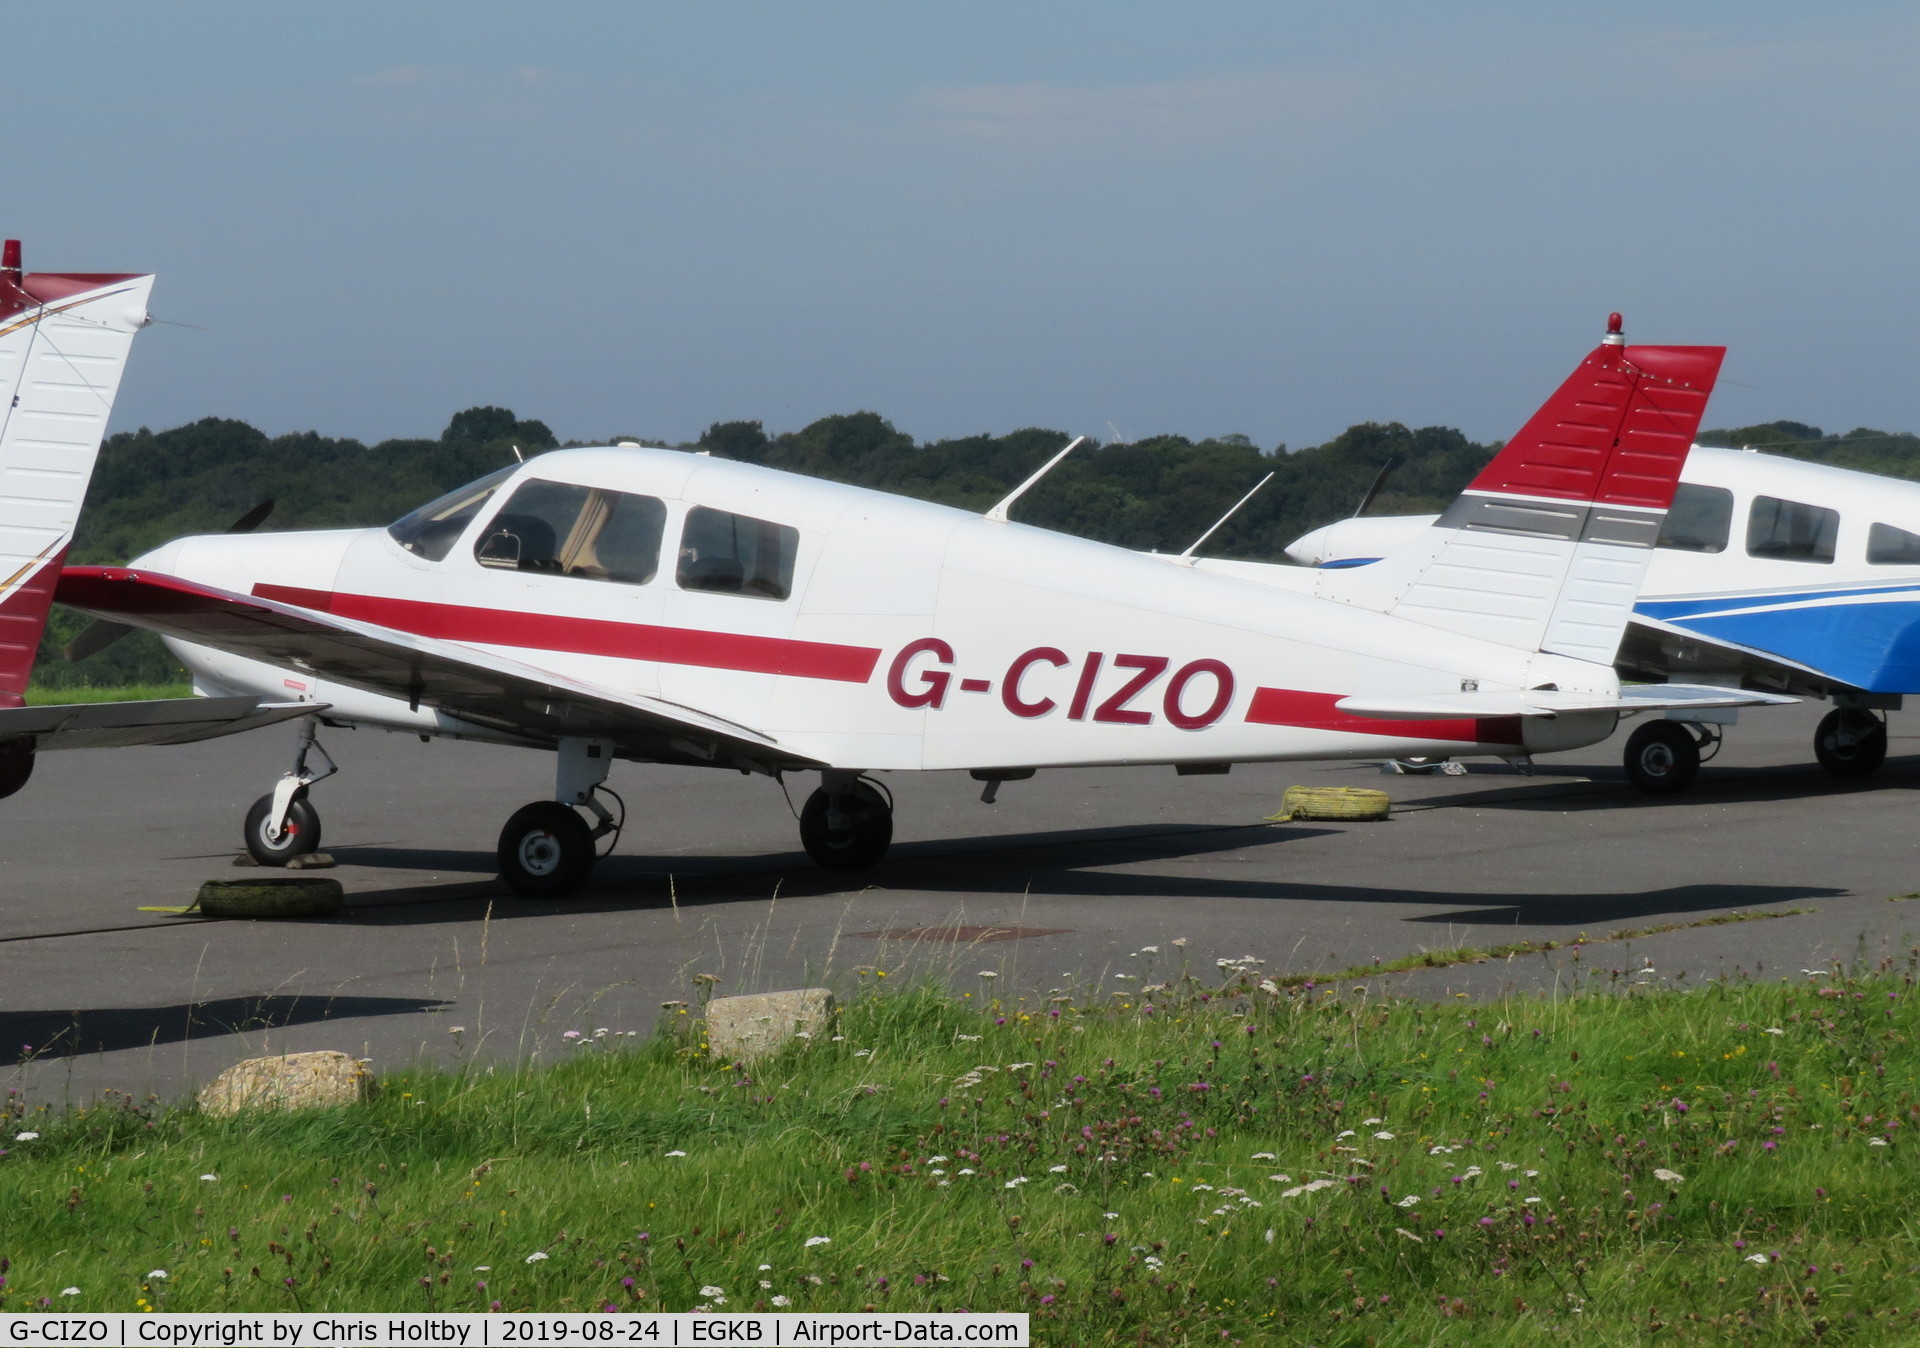 G-CIZO, 1989 Piper PA-28-161 Cadet C/N 2841155, Cadet at Biggin Hill operated by Falcon Air Services